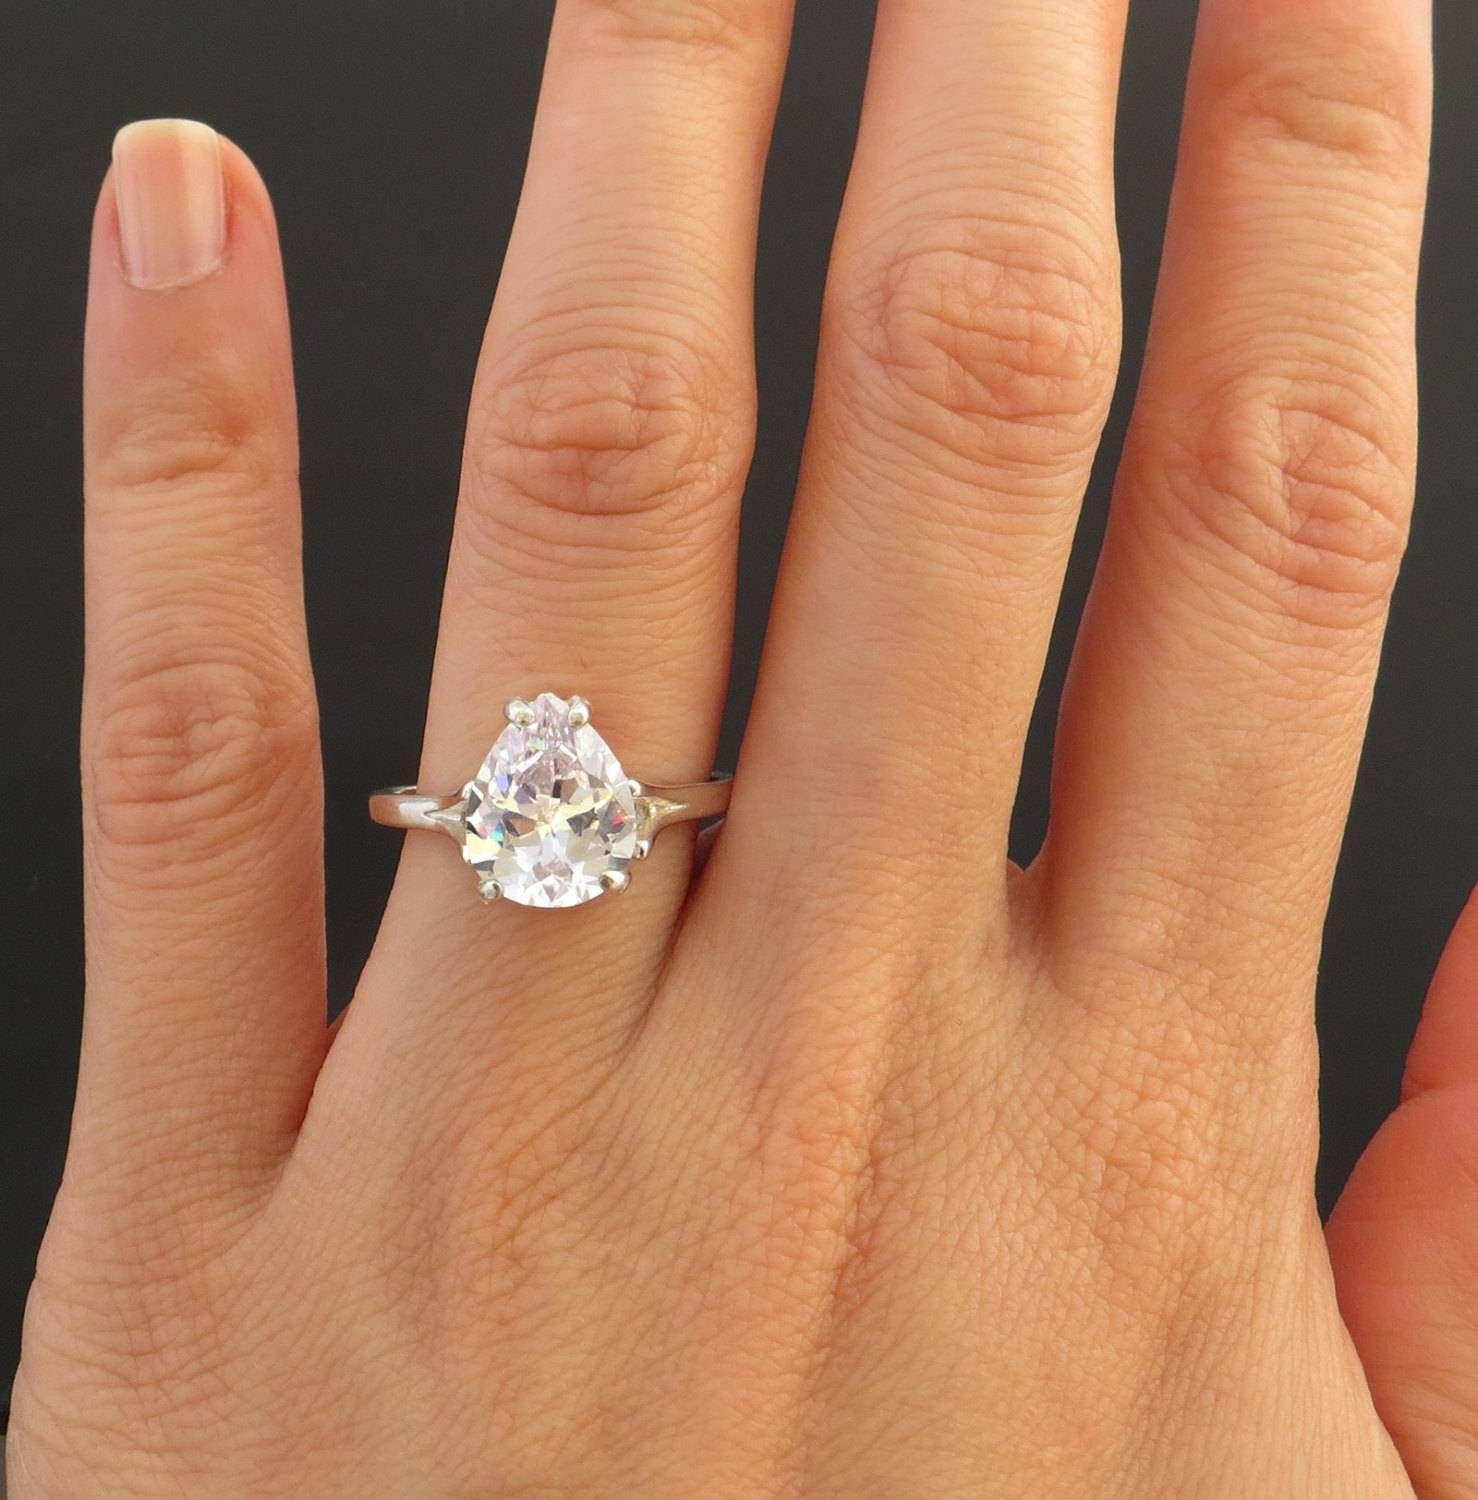 2 Carat Princess Cut Diamond Engagement Ring
 2019 Popular 2 5 Ct Princess Cut Diamond Engagement Rings